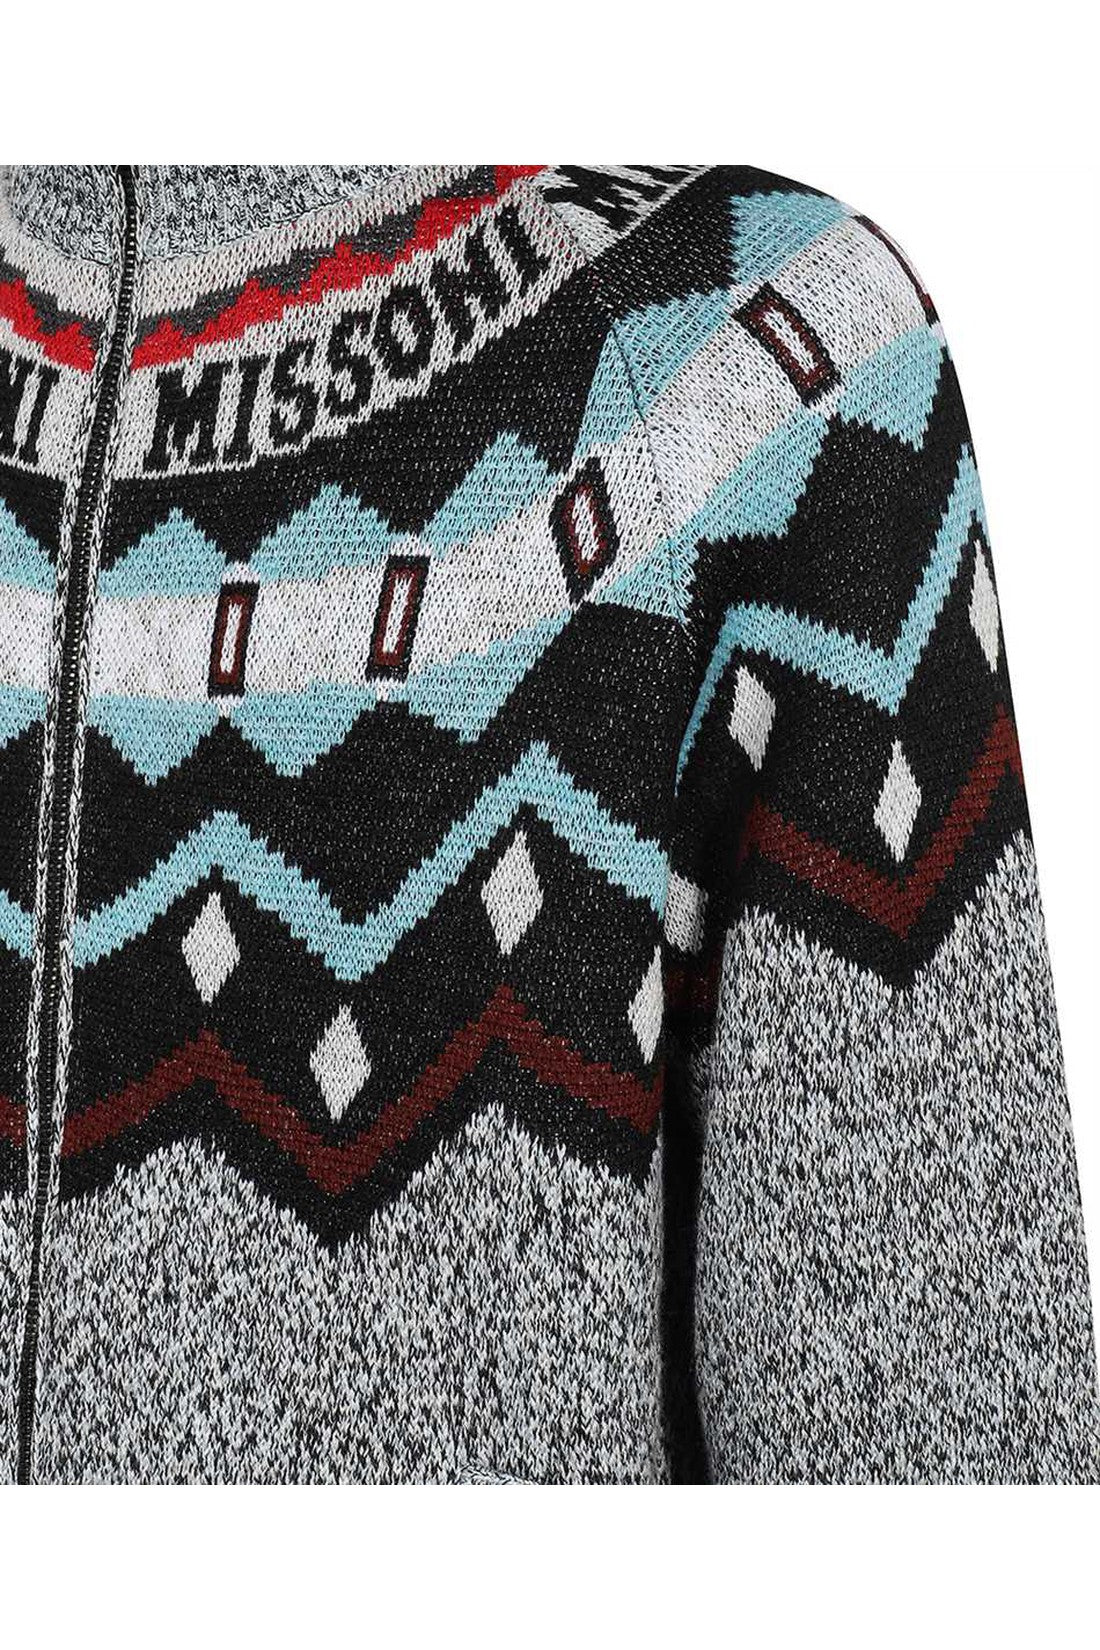 Missoni-OUTLET-SALE-Wool-knit-jacket-Jacken-Mantel-ARCHIVE-COLLECTION-3.jpg